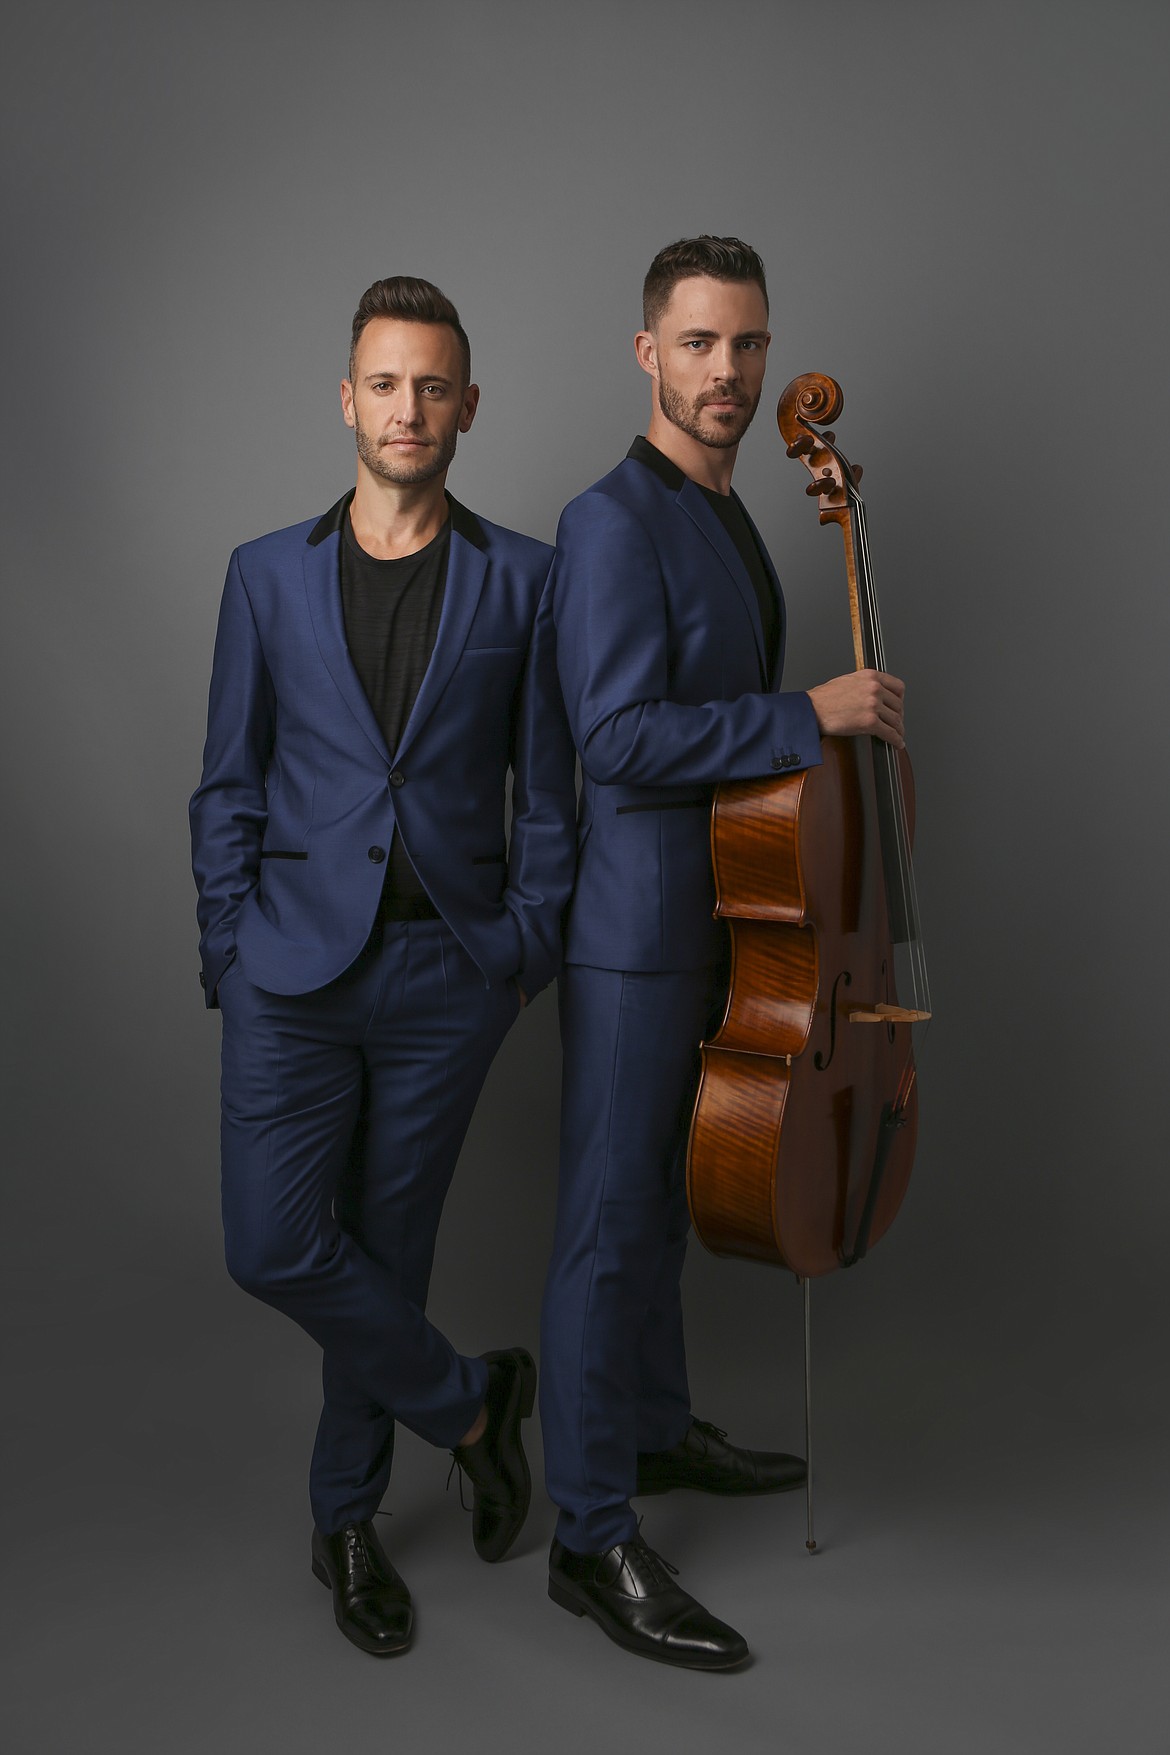 Branden James (left) and James Clark (right) combine James’ vocals and Clark’s cello as the duo Branden & James.